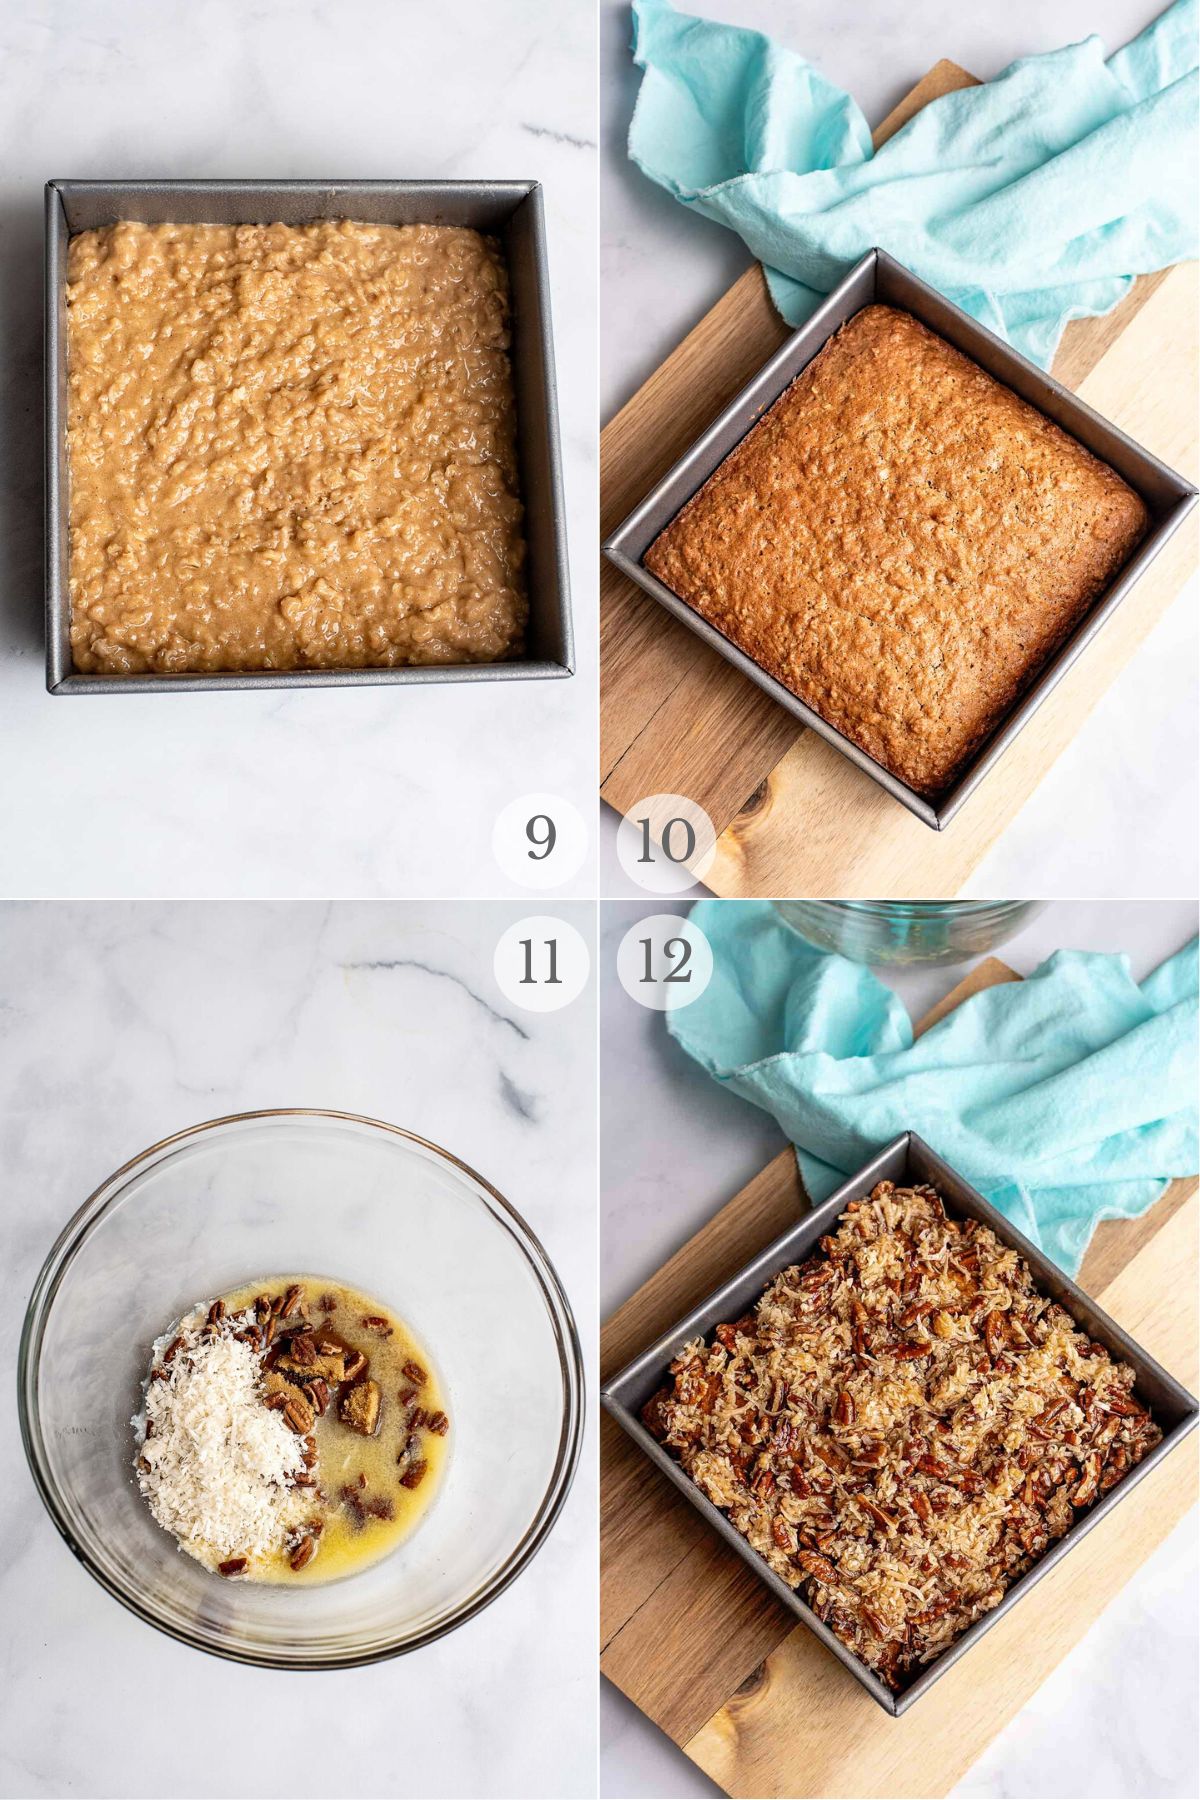 oatmeal cake recipe steps 9-12.